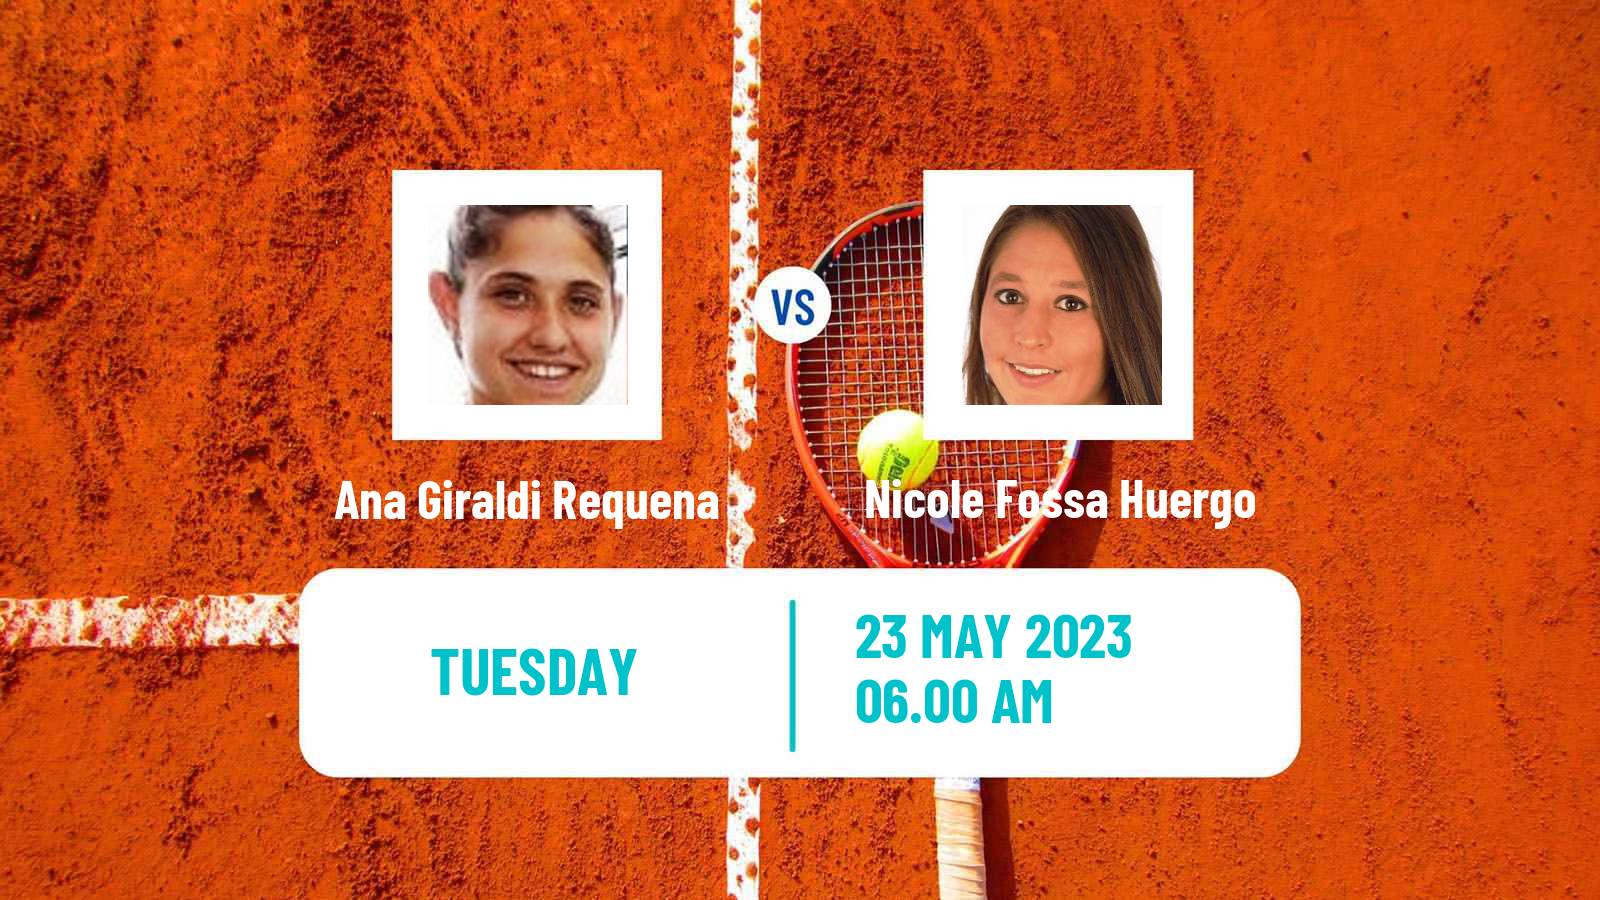 Tennis ITF W15 Malaga Women Ana Giraldi Requena - Nicole Fossa Huergo